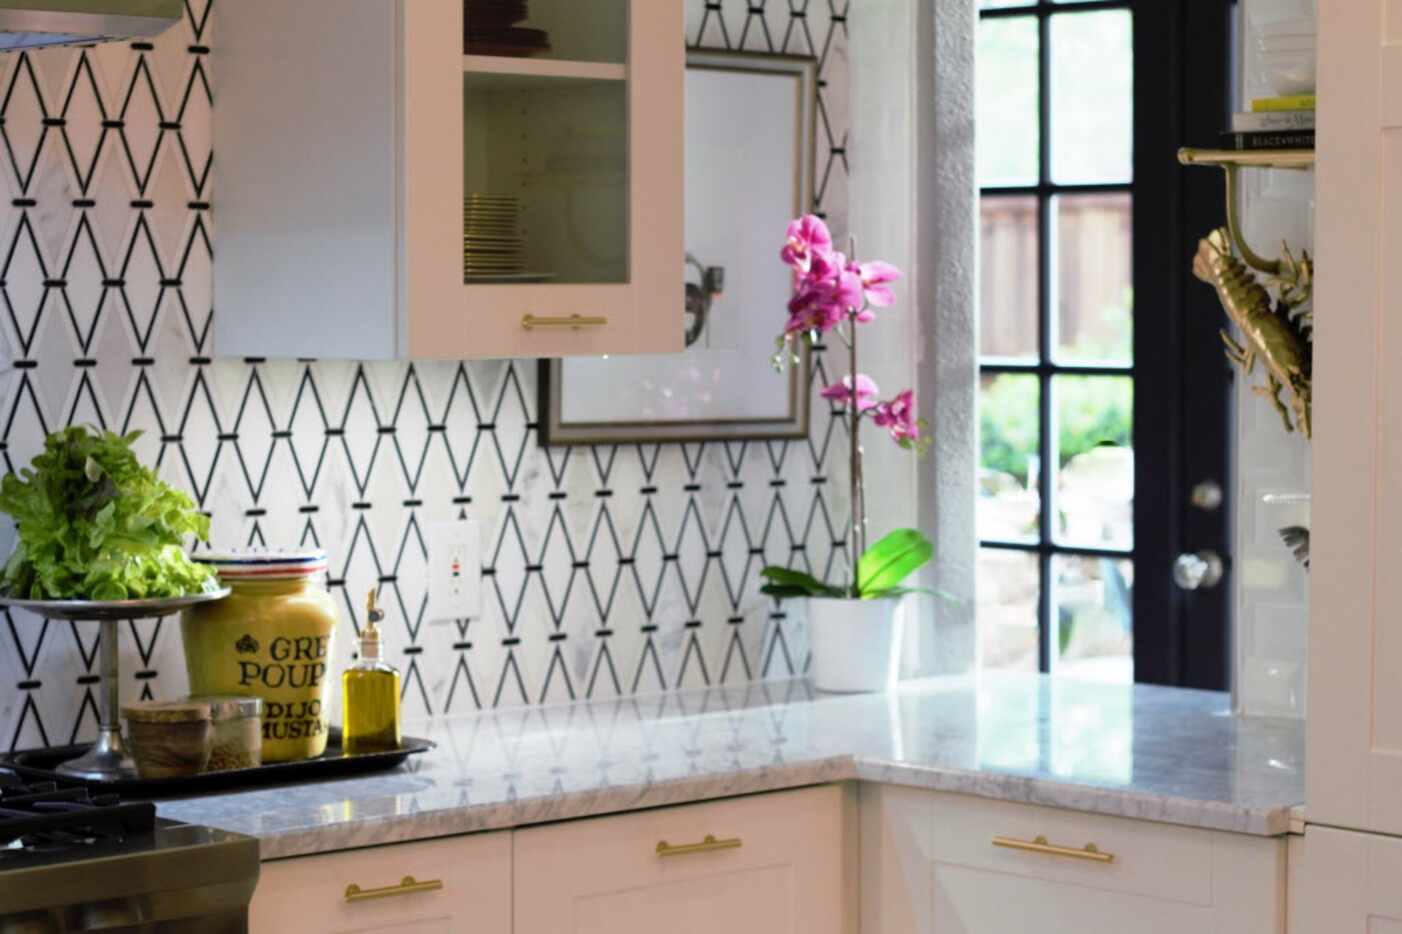 A bold diamond pattern helped transform a kitchen designed by Elaine Williamson-Romero.